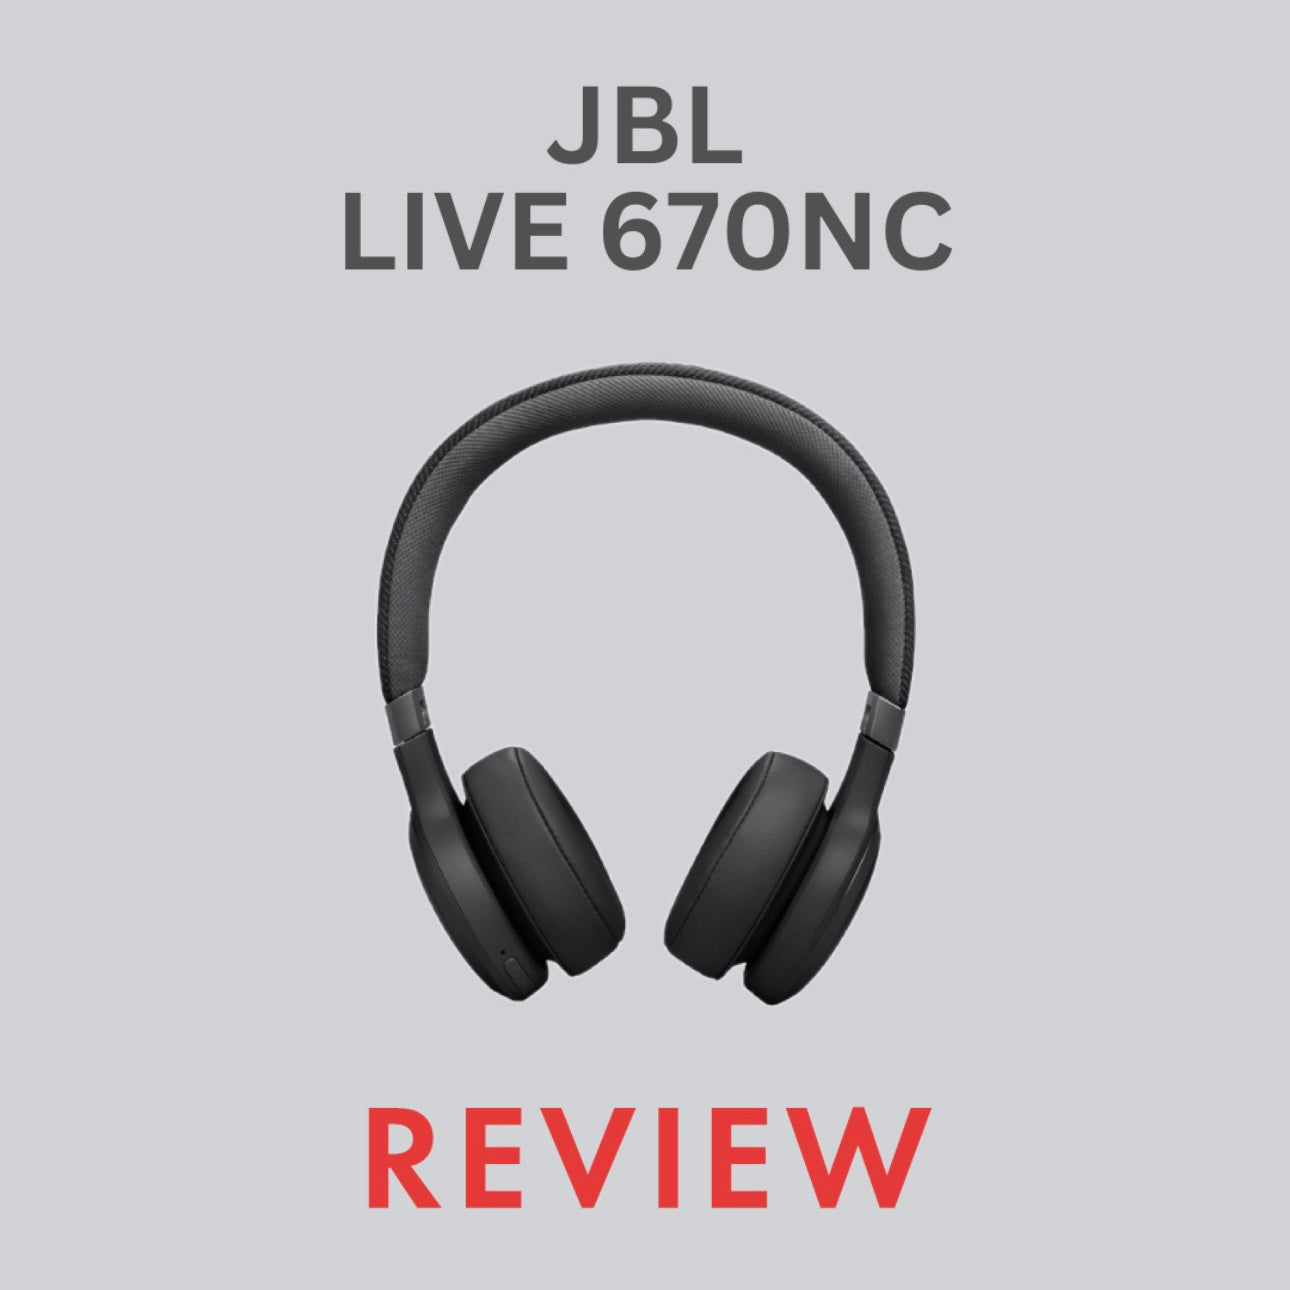 JBL LIVE 670NC REVIEW